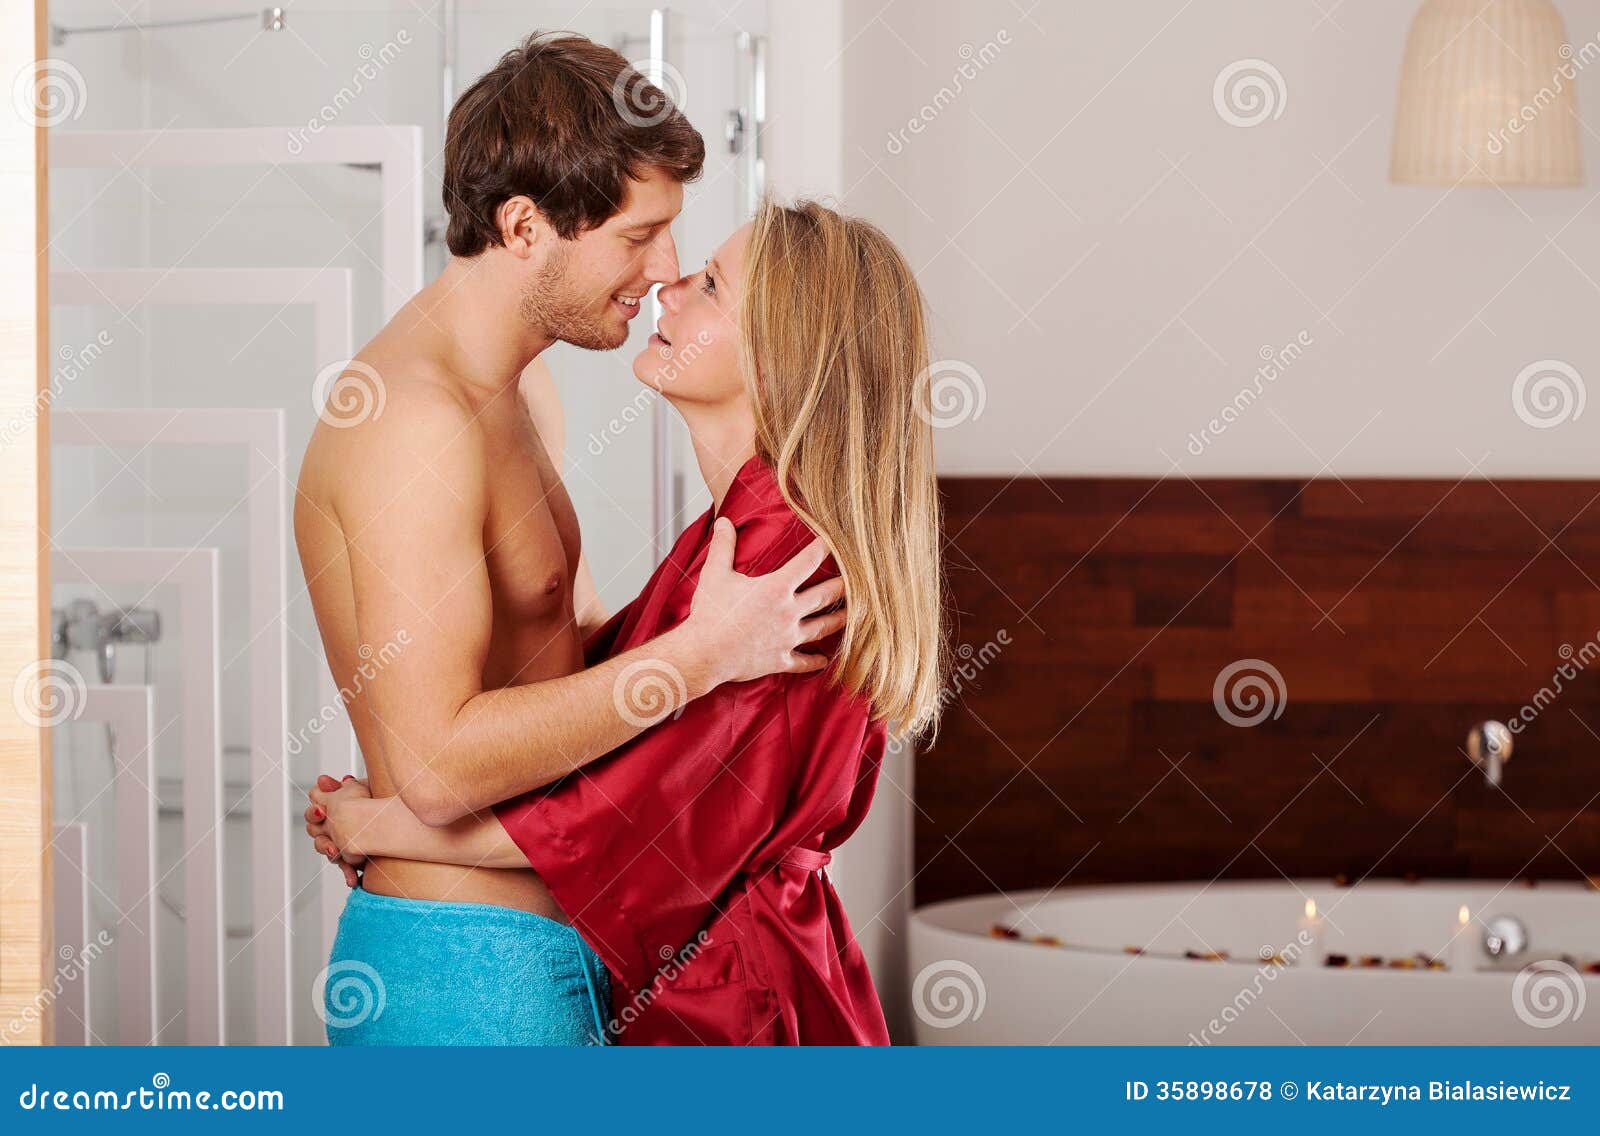 husband wife bathroom sex video